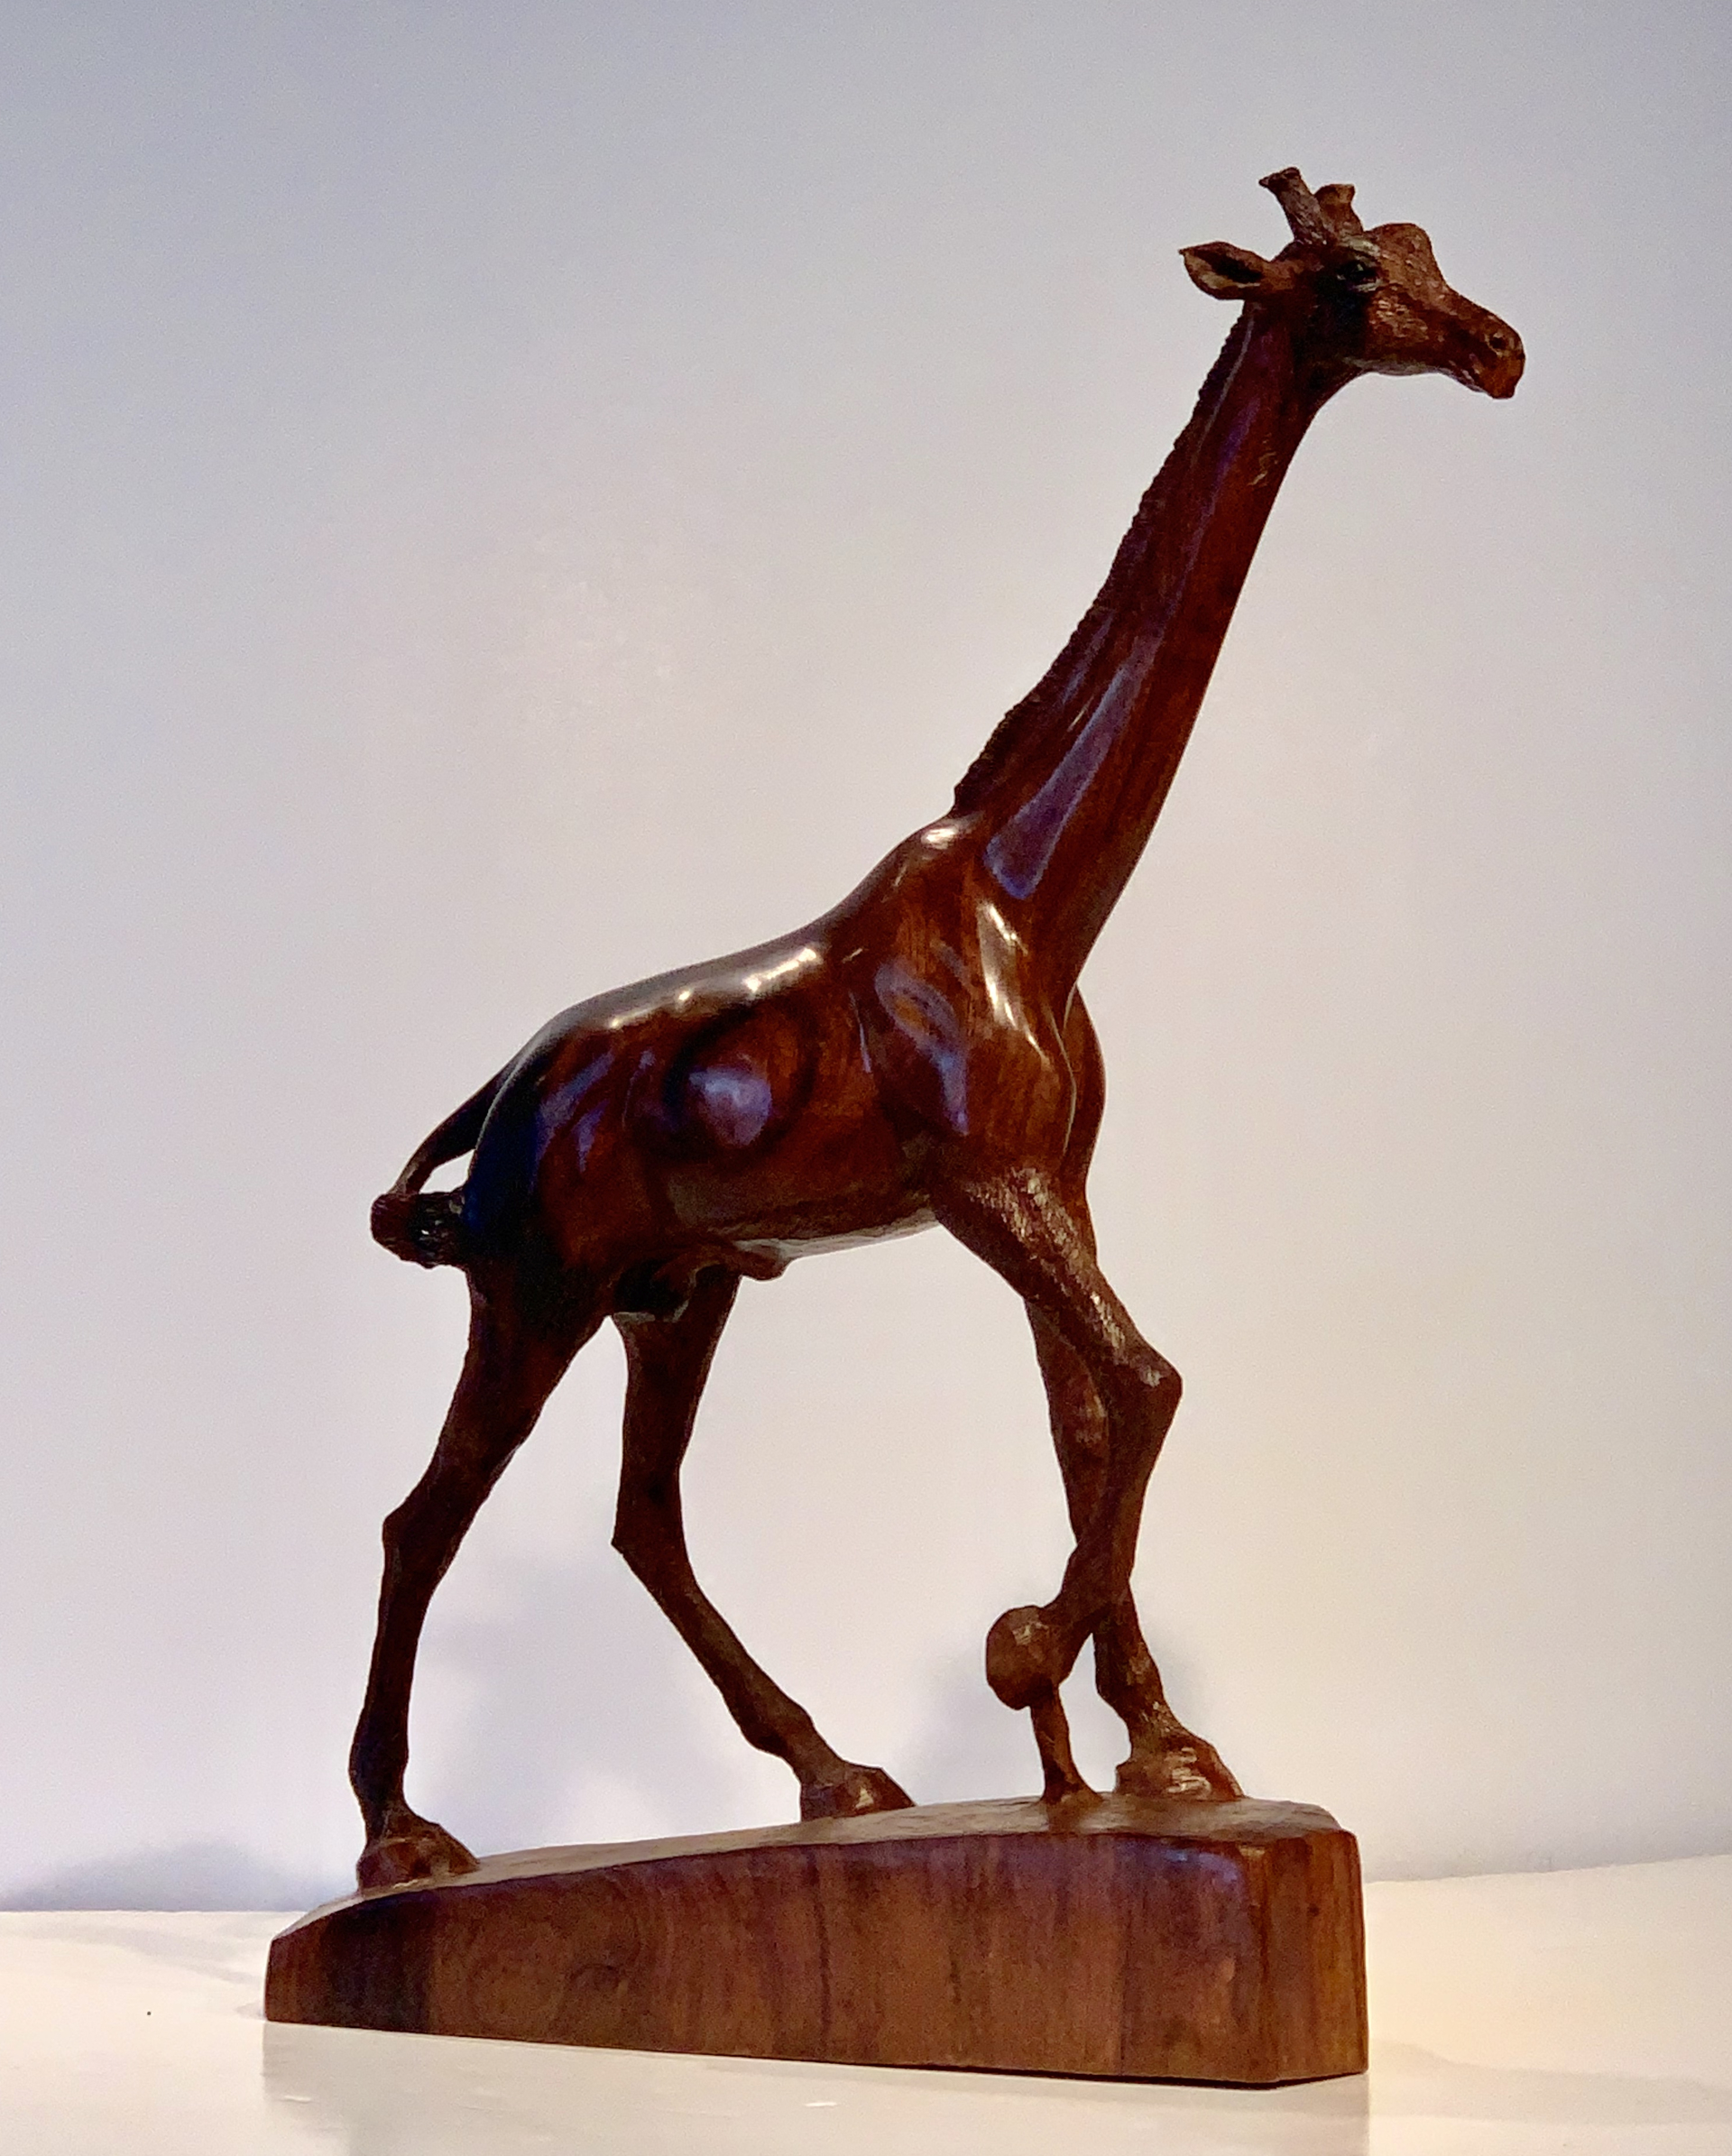 Giraffe by Thomas Suby